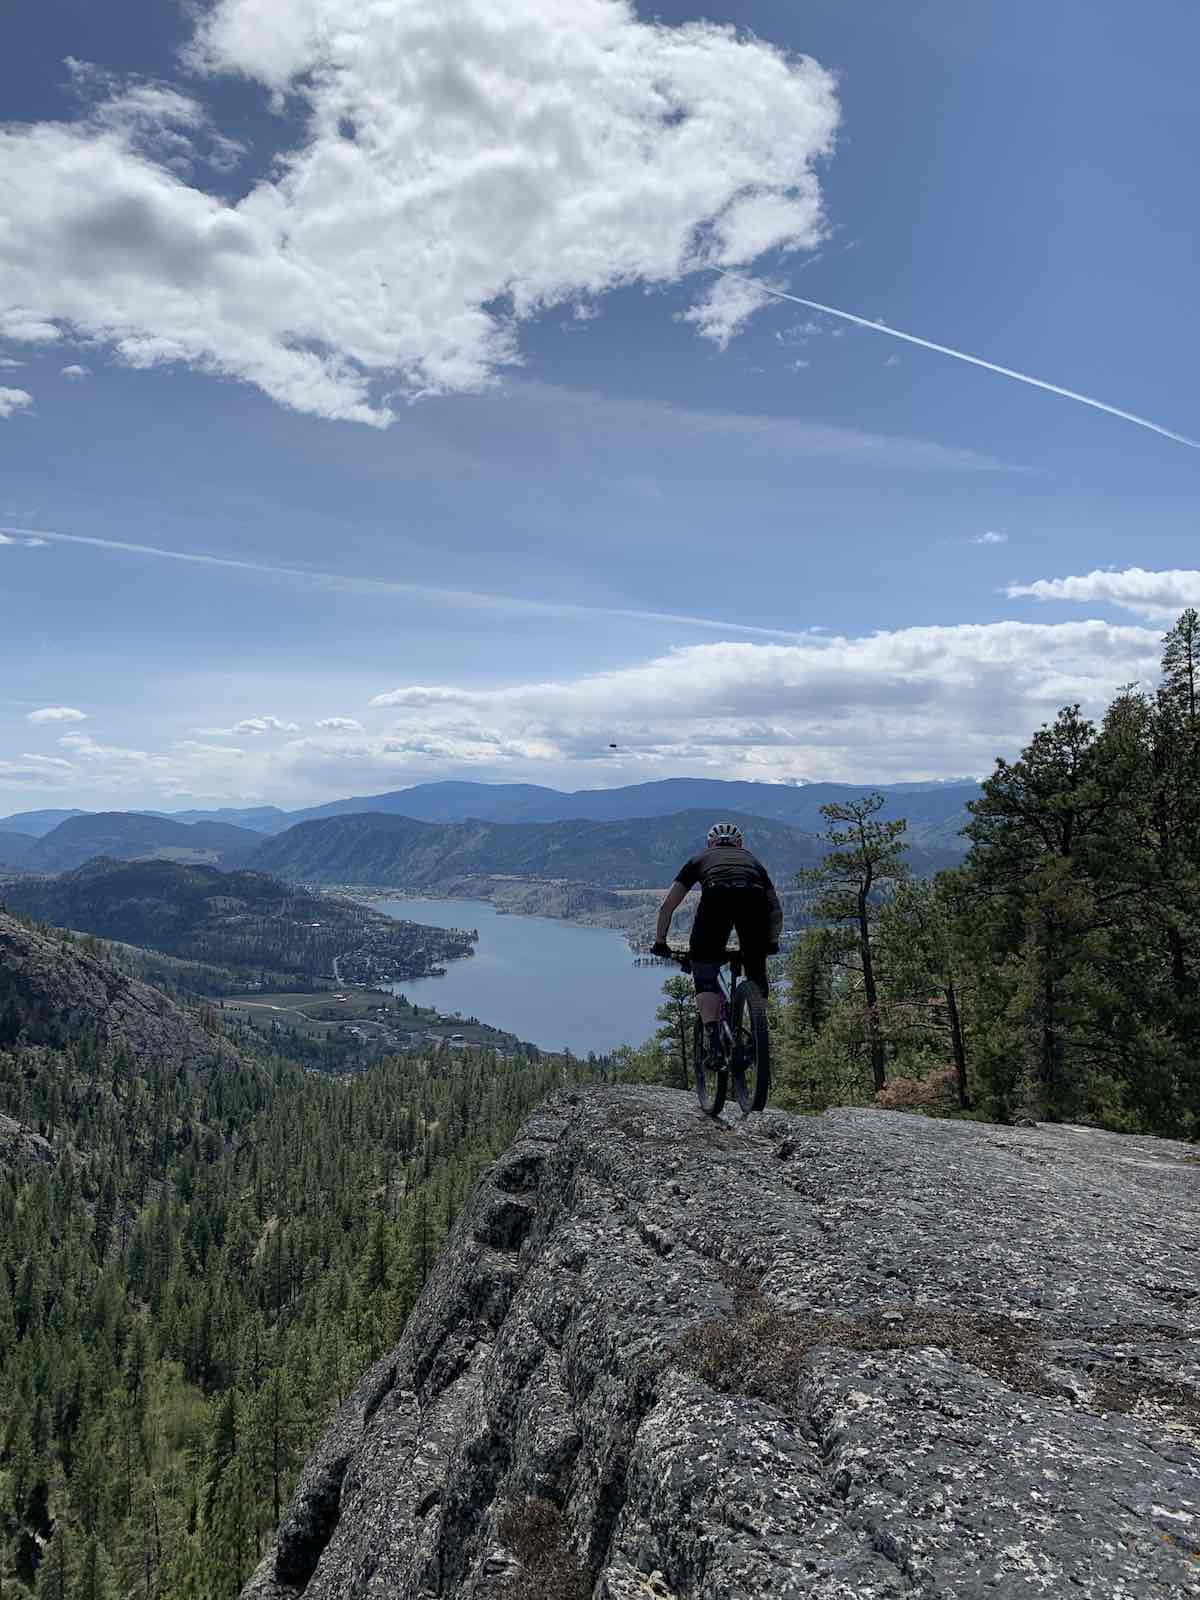 bikerumor pic of the day cyclist on top of rock overlooking Okanagan valley in British Columbia.